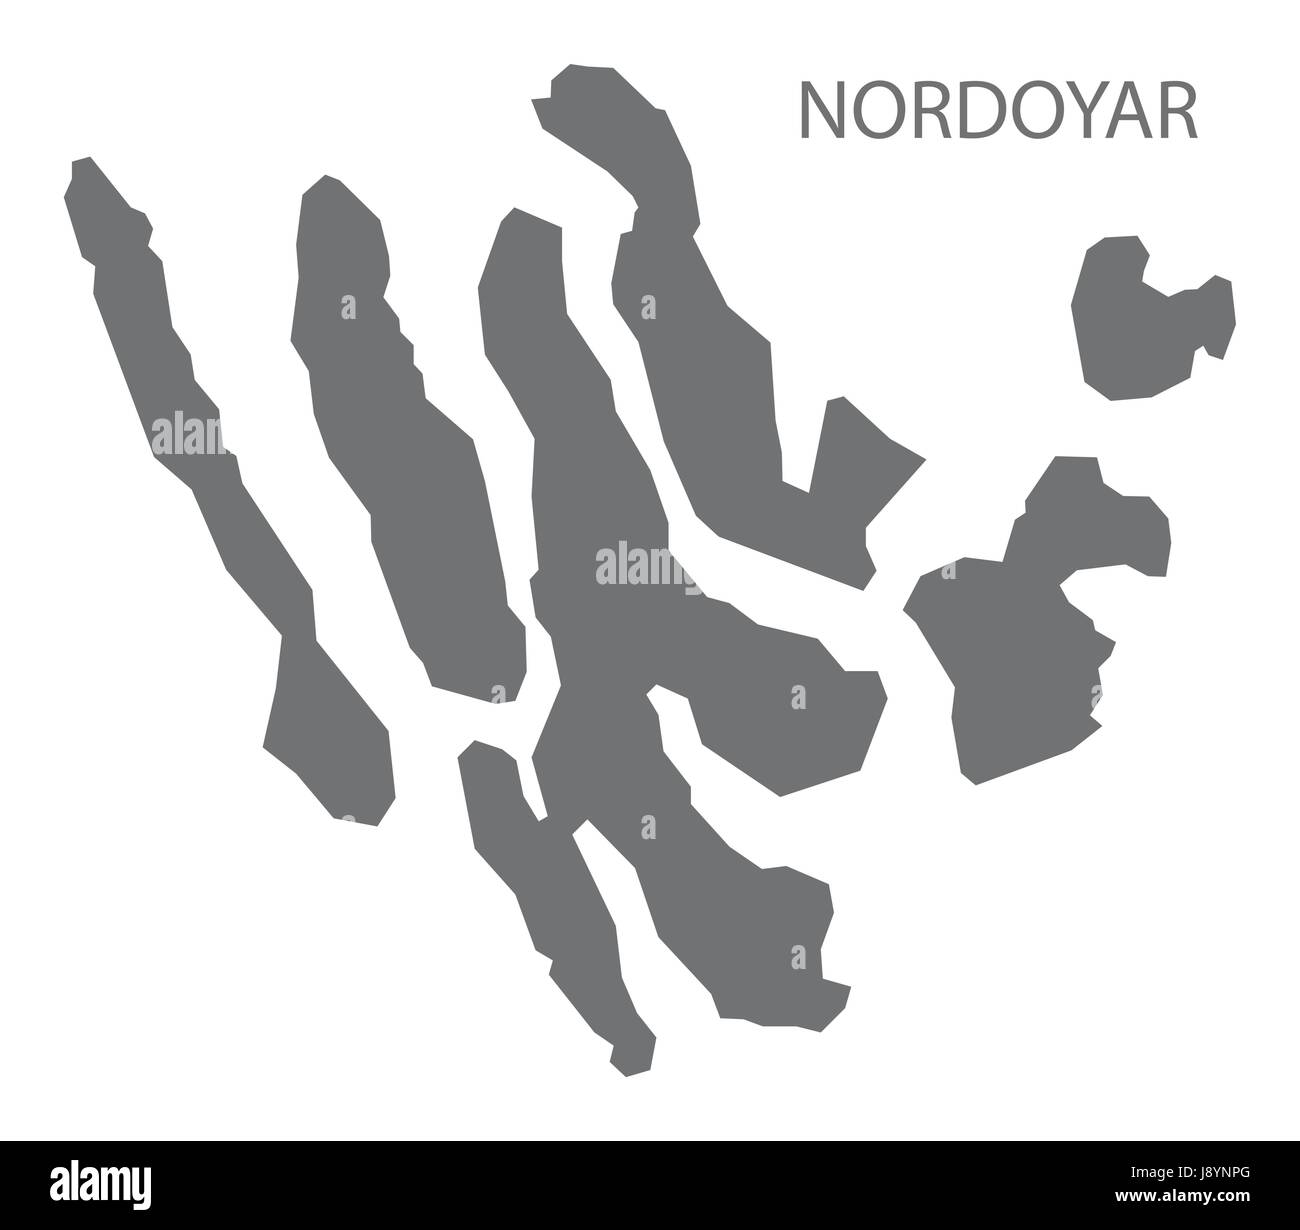 Nordoyar map grey illustration silhouette Stock Vector